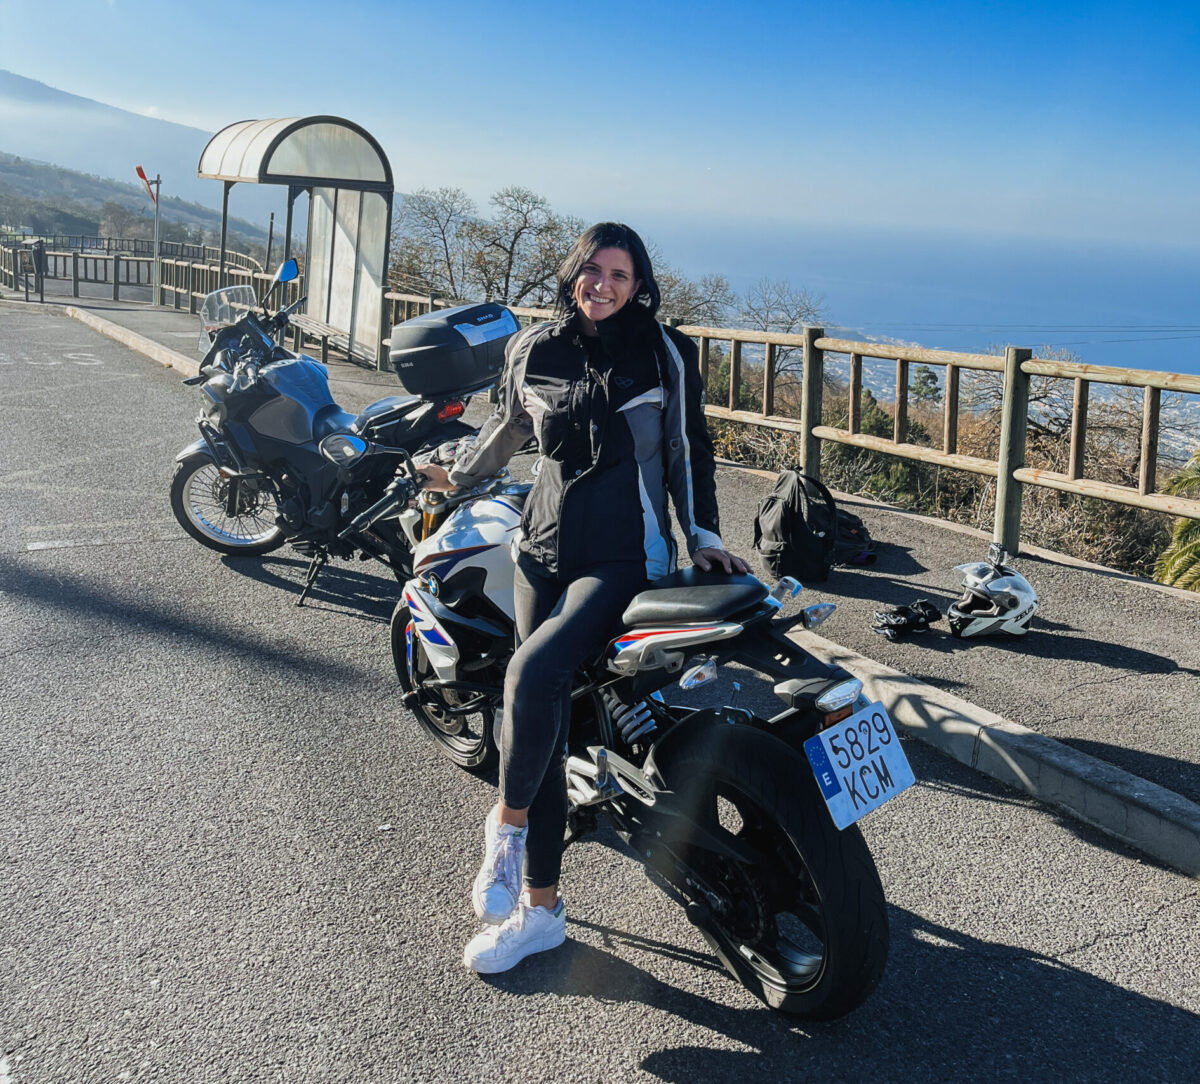 Motorcycle Phone Mount Review: Quadlock - The Tejana Biker